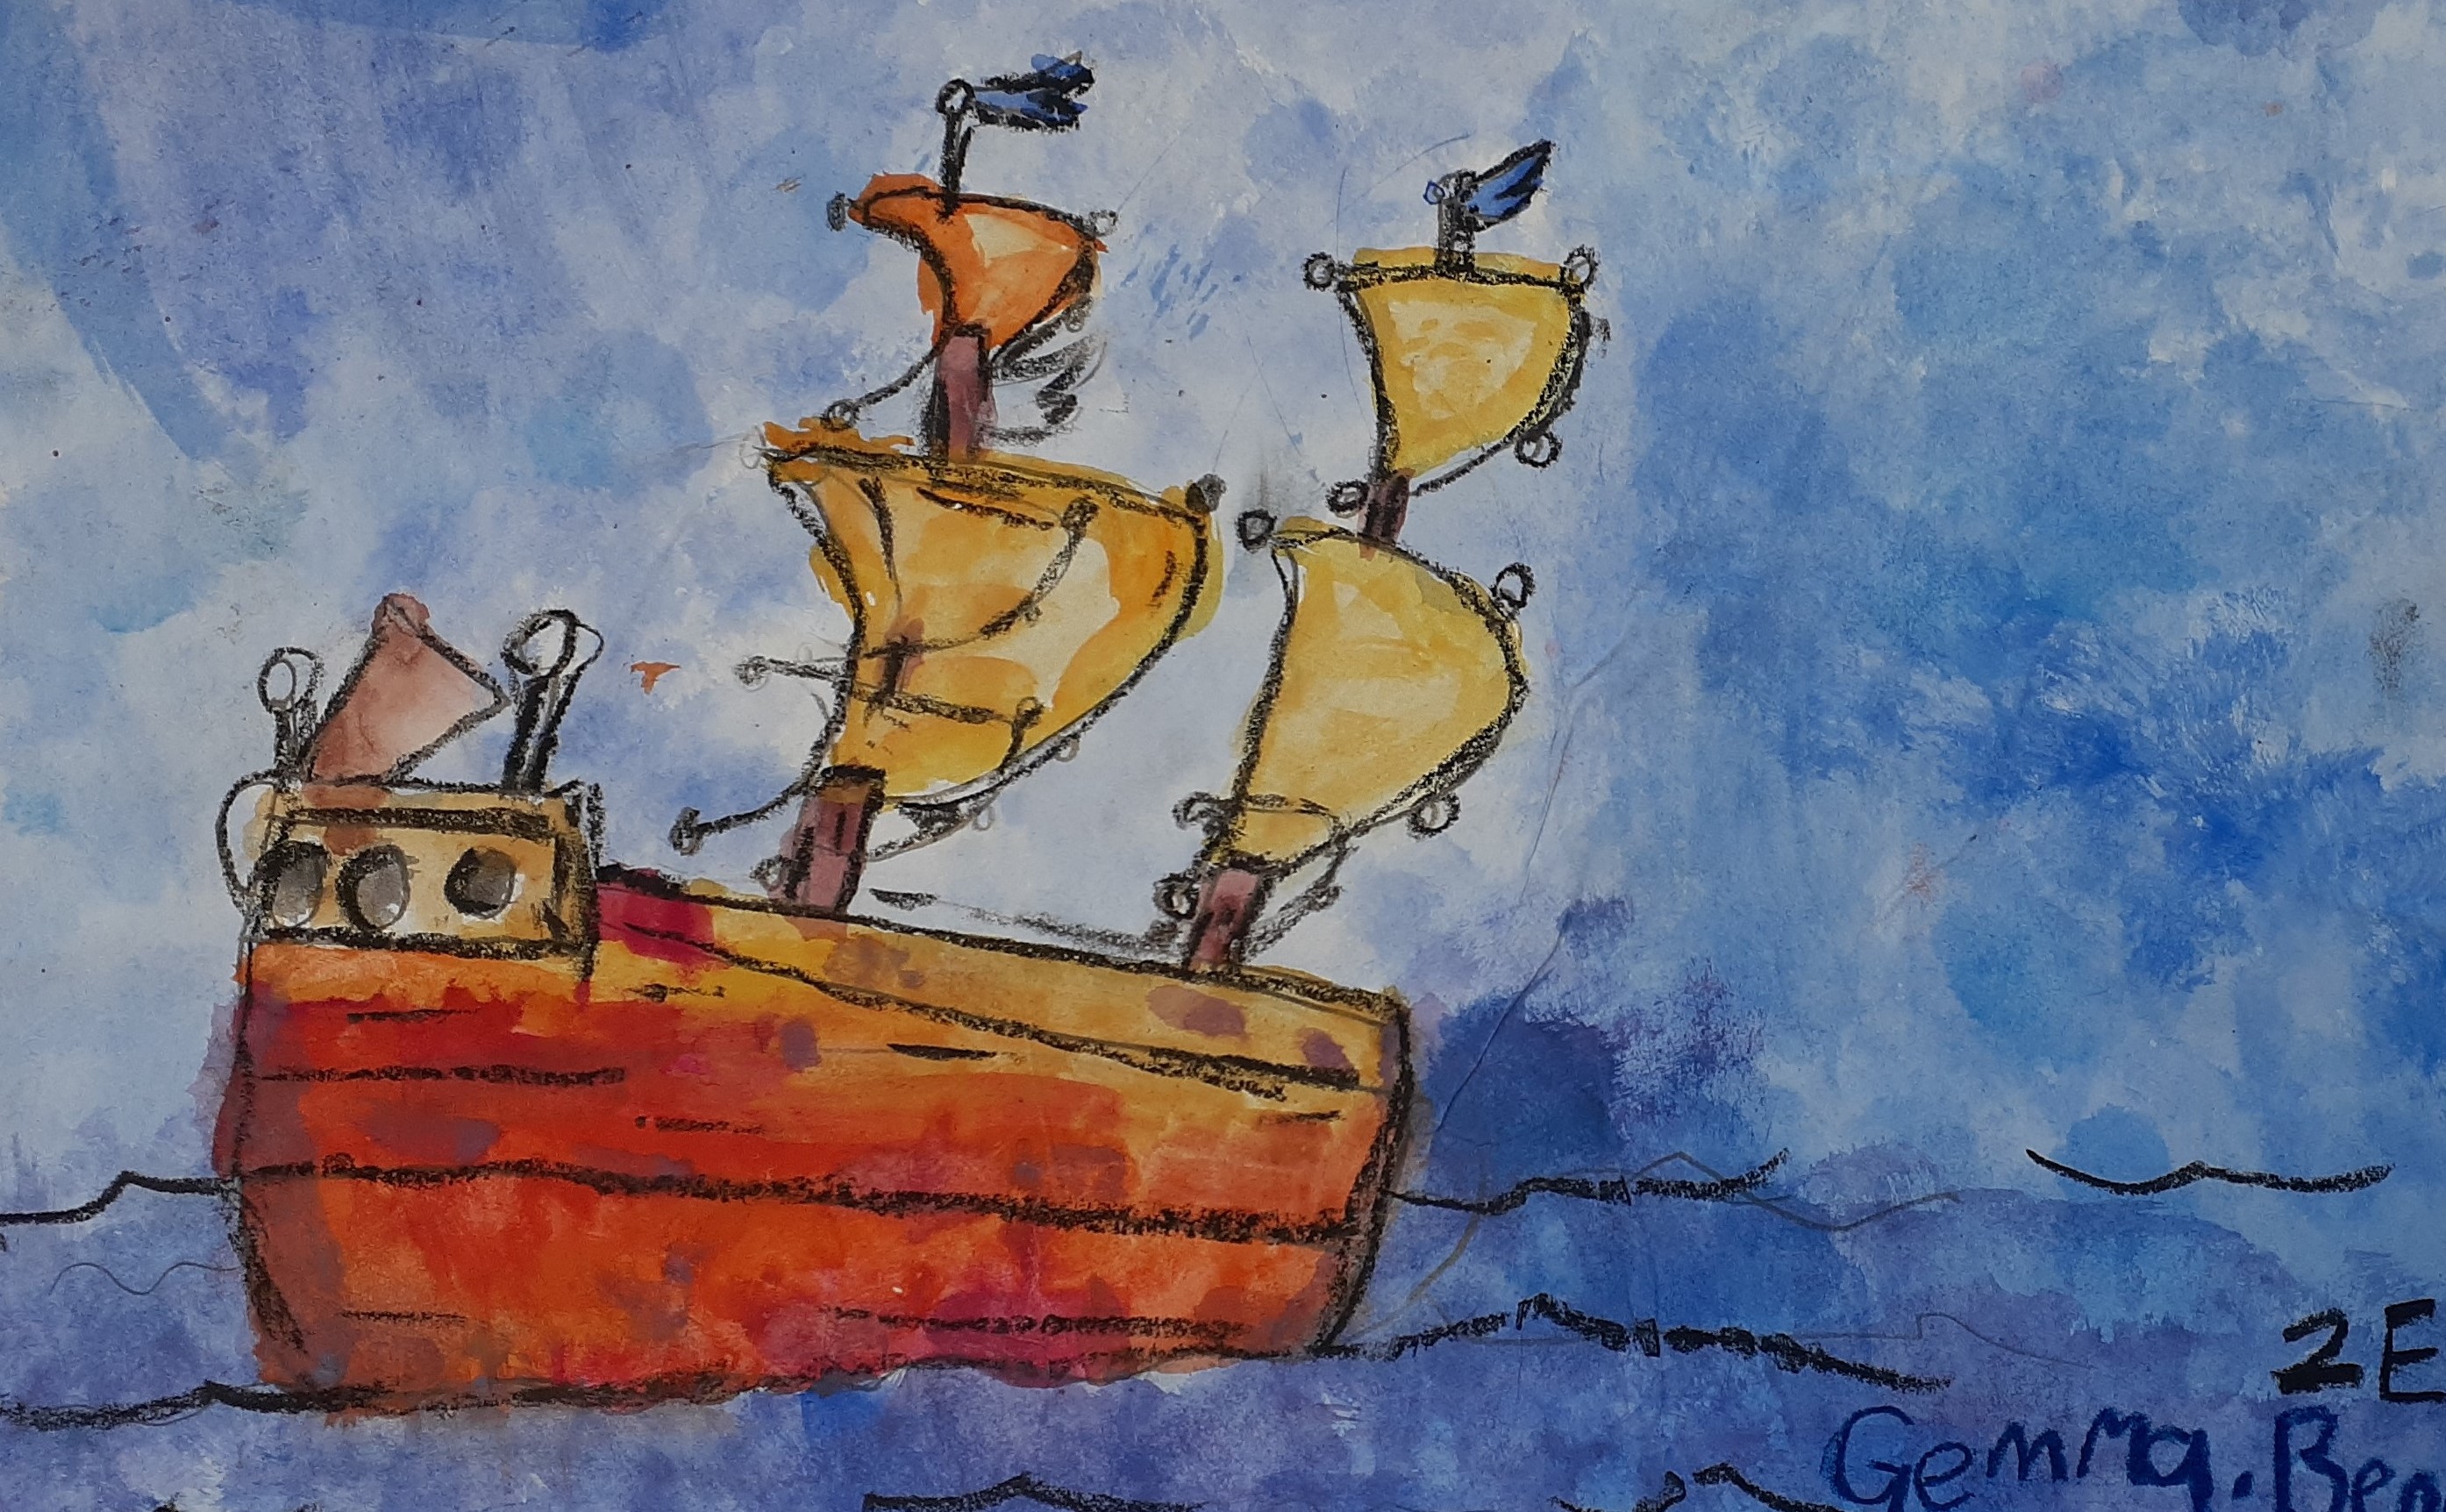 Student artwork - Sailing the Seas